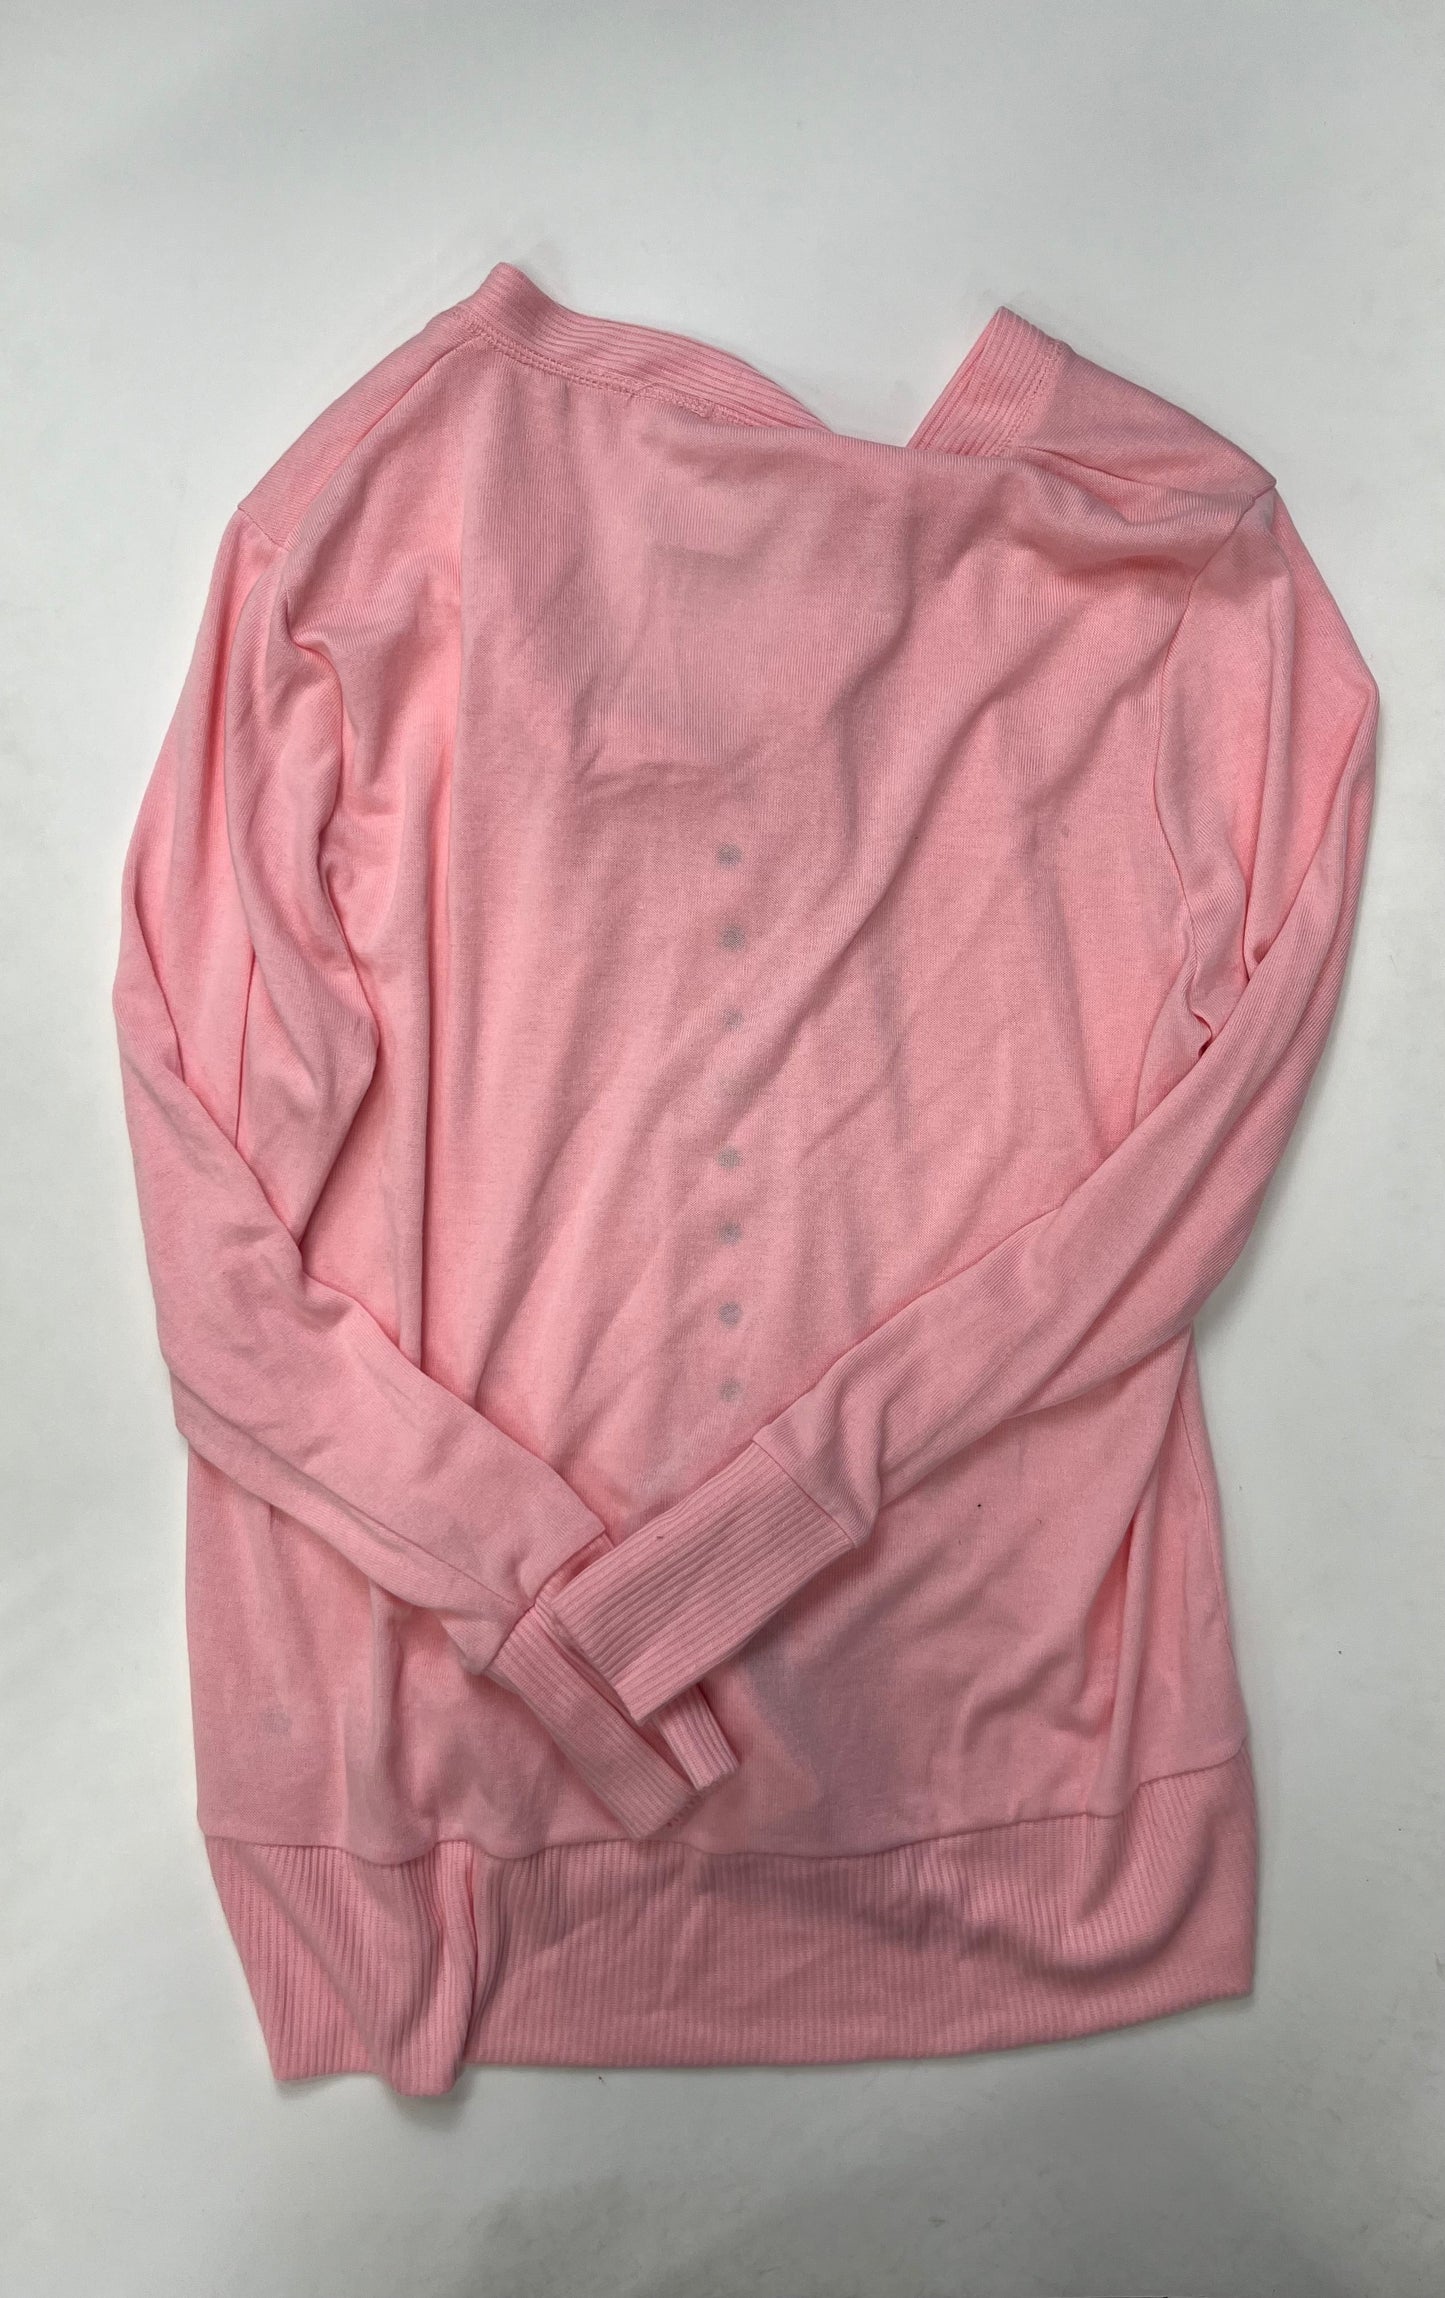 Pink Sweater Cardigan Zenana Outfitters, Size 1x